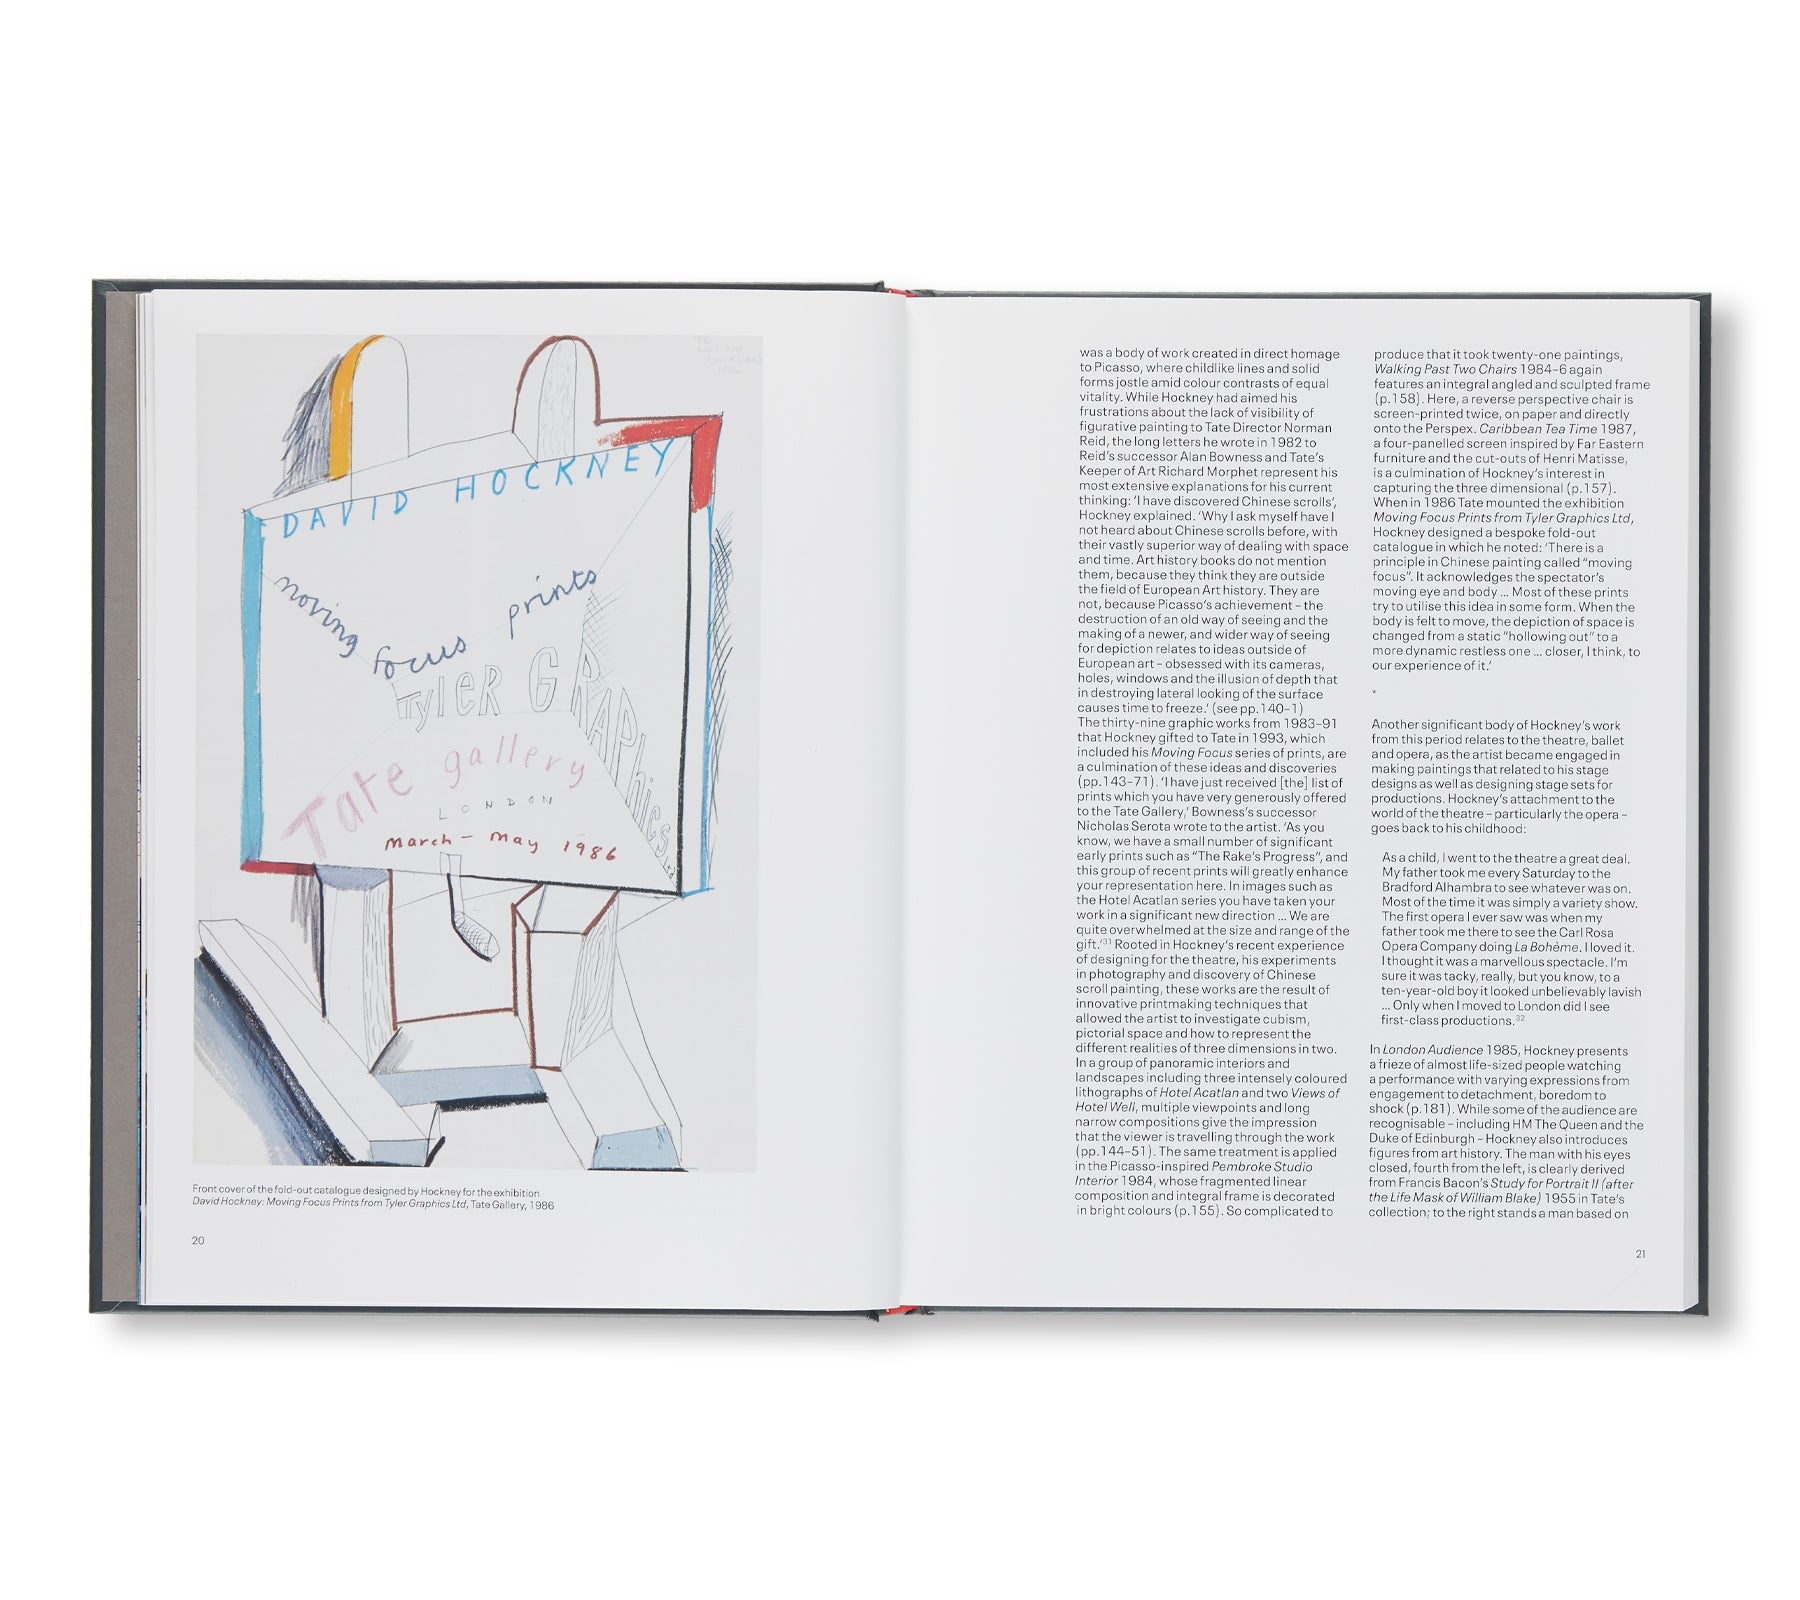 MOVING FOCUS by David Hockney [SALE]